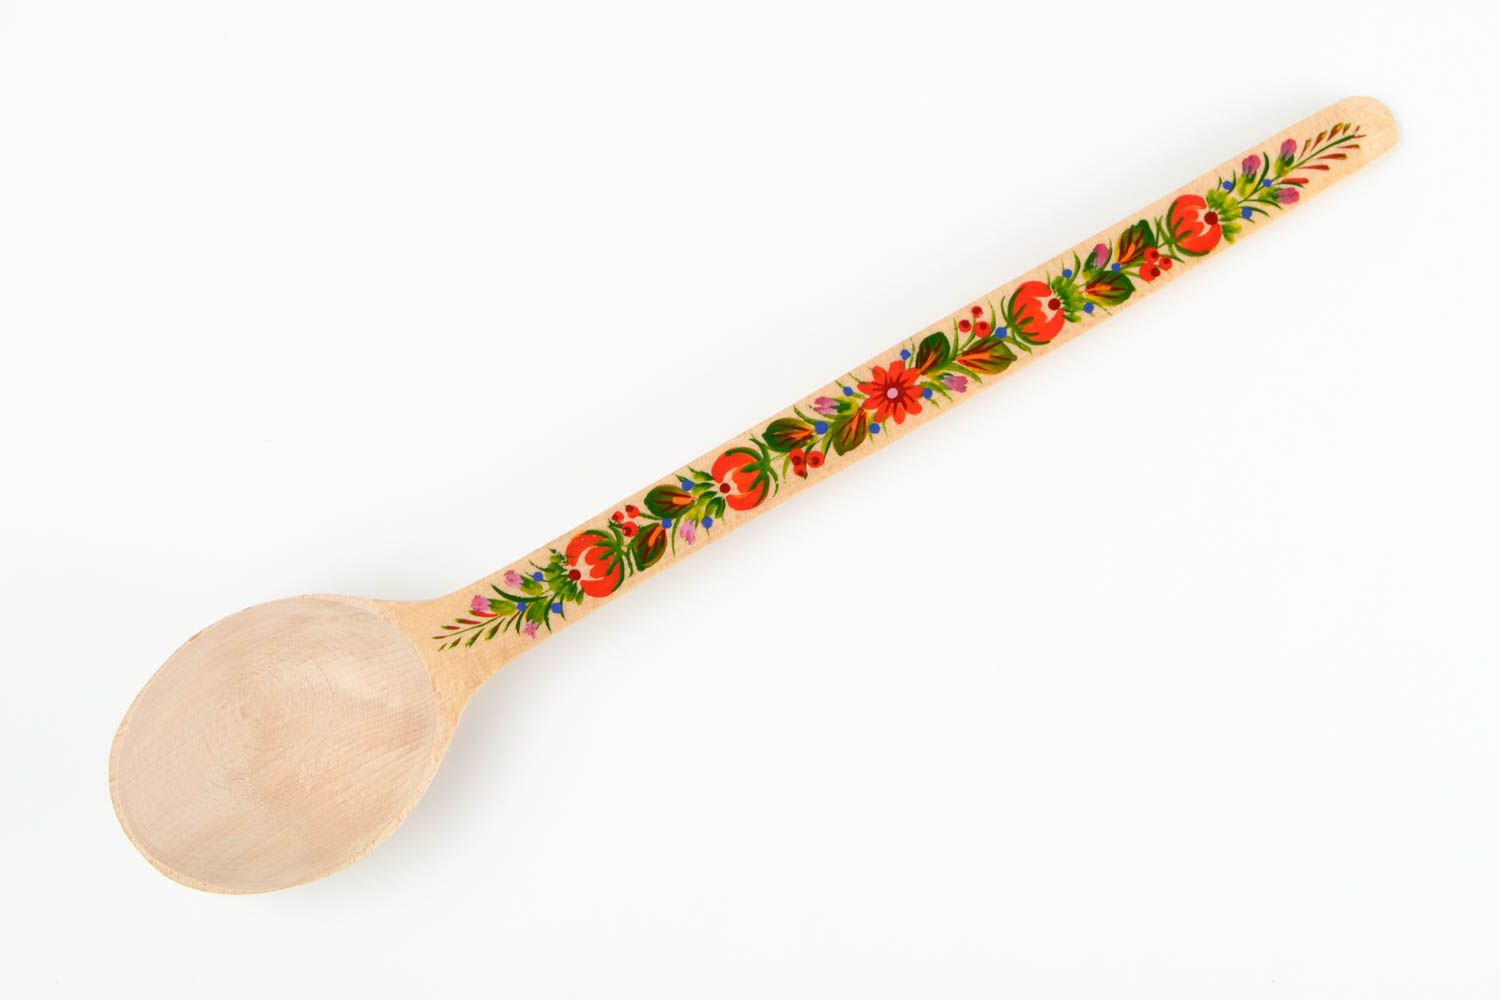 Handmade spoon designer spoon for kitchen decor ideas wooden spoon gift ideas photo 3